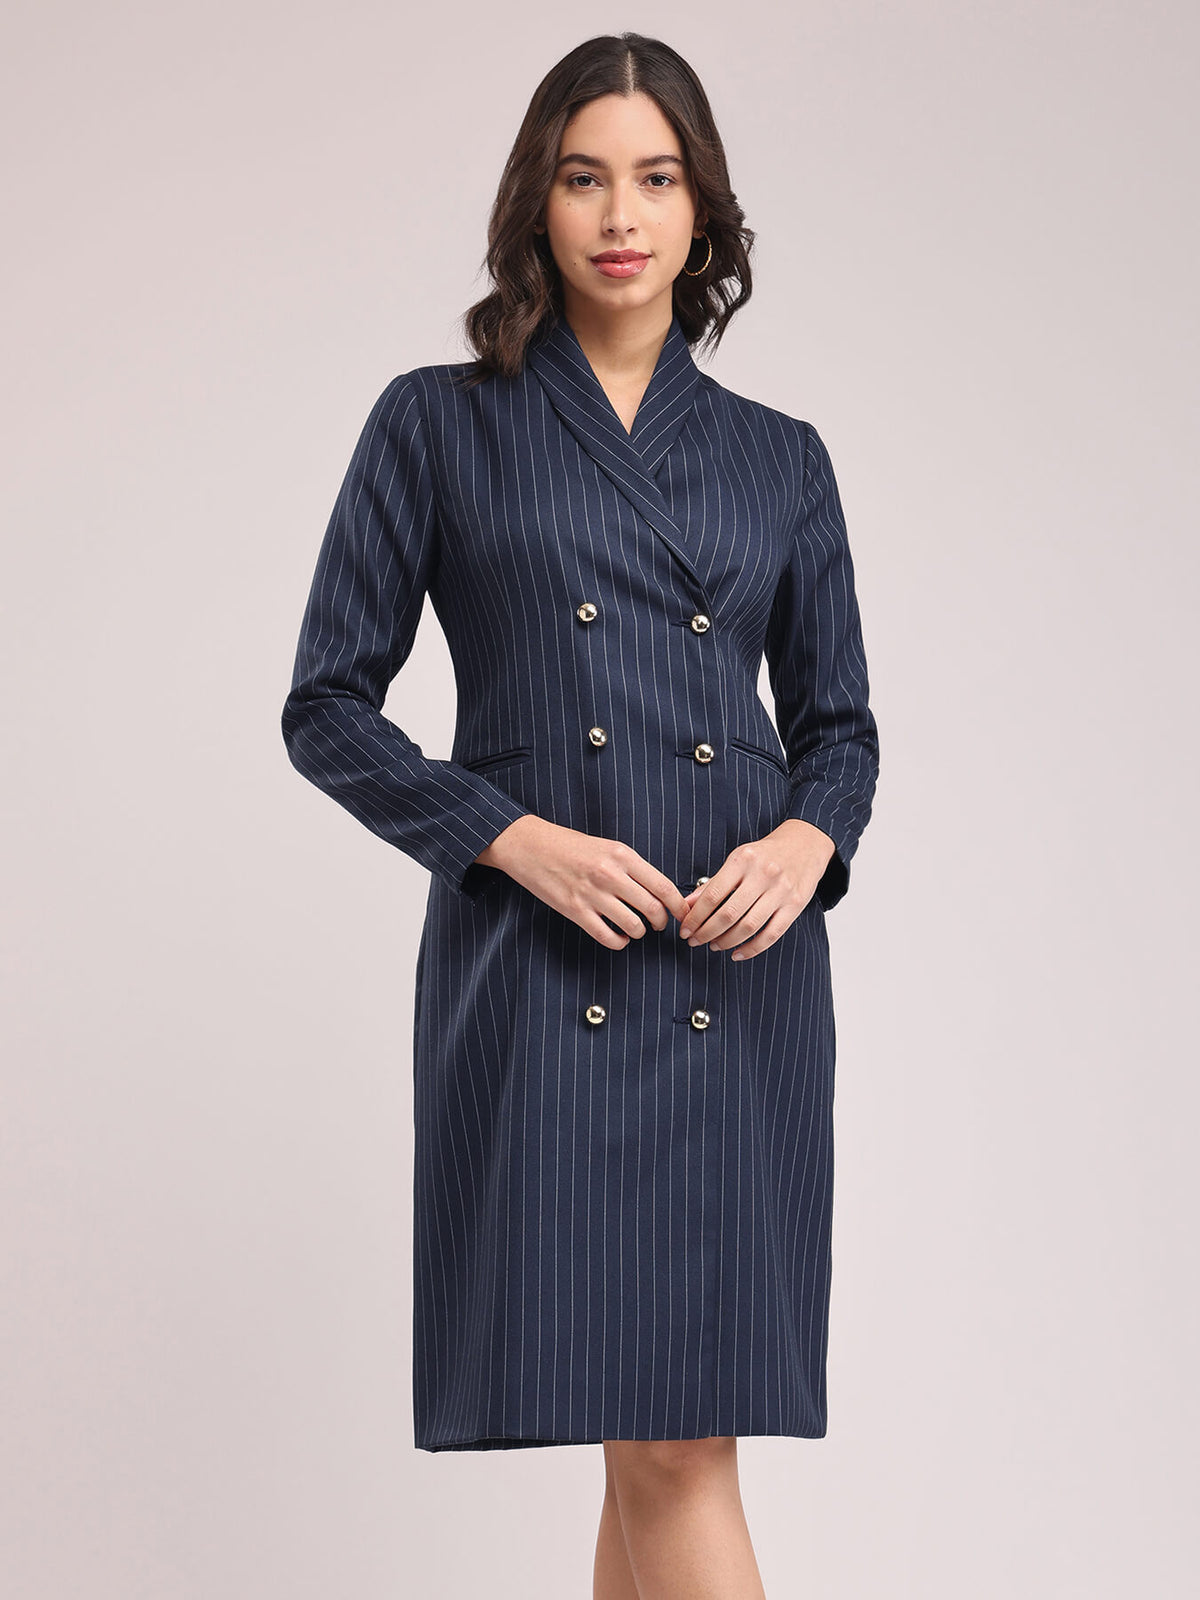 Shawl Collar Blazer Dresses - Navy Blue